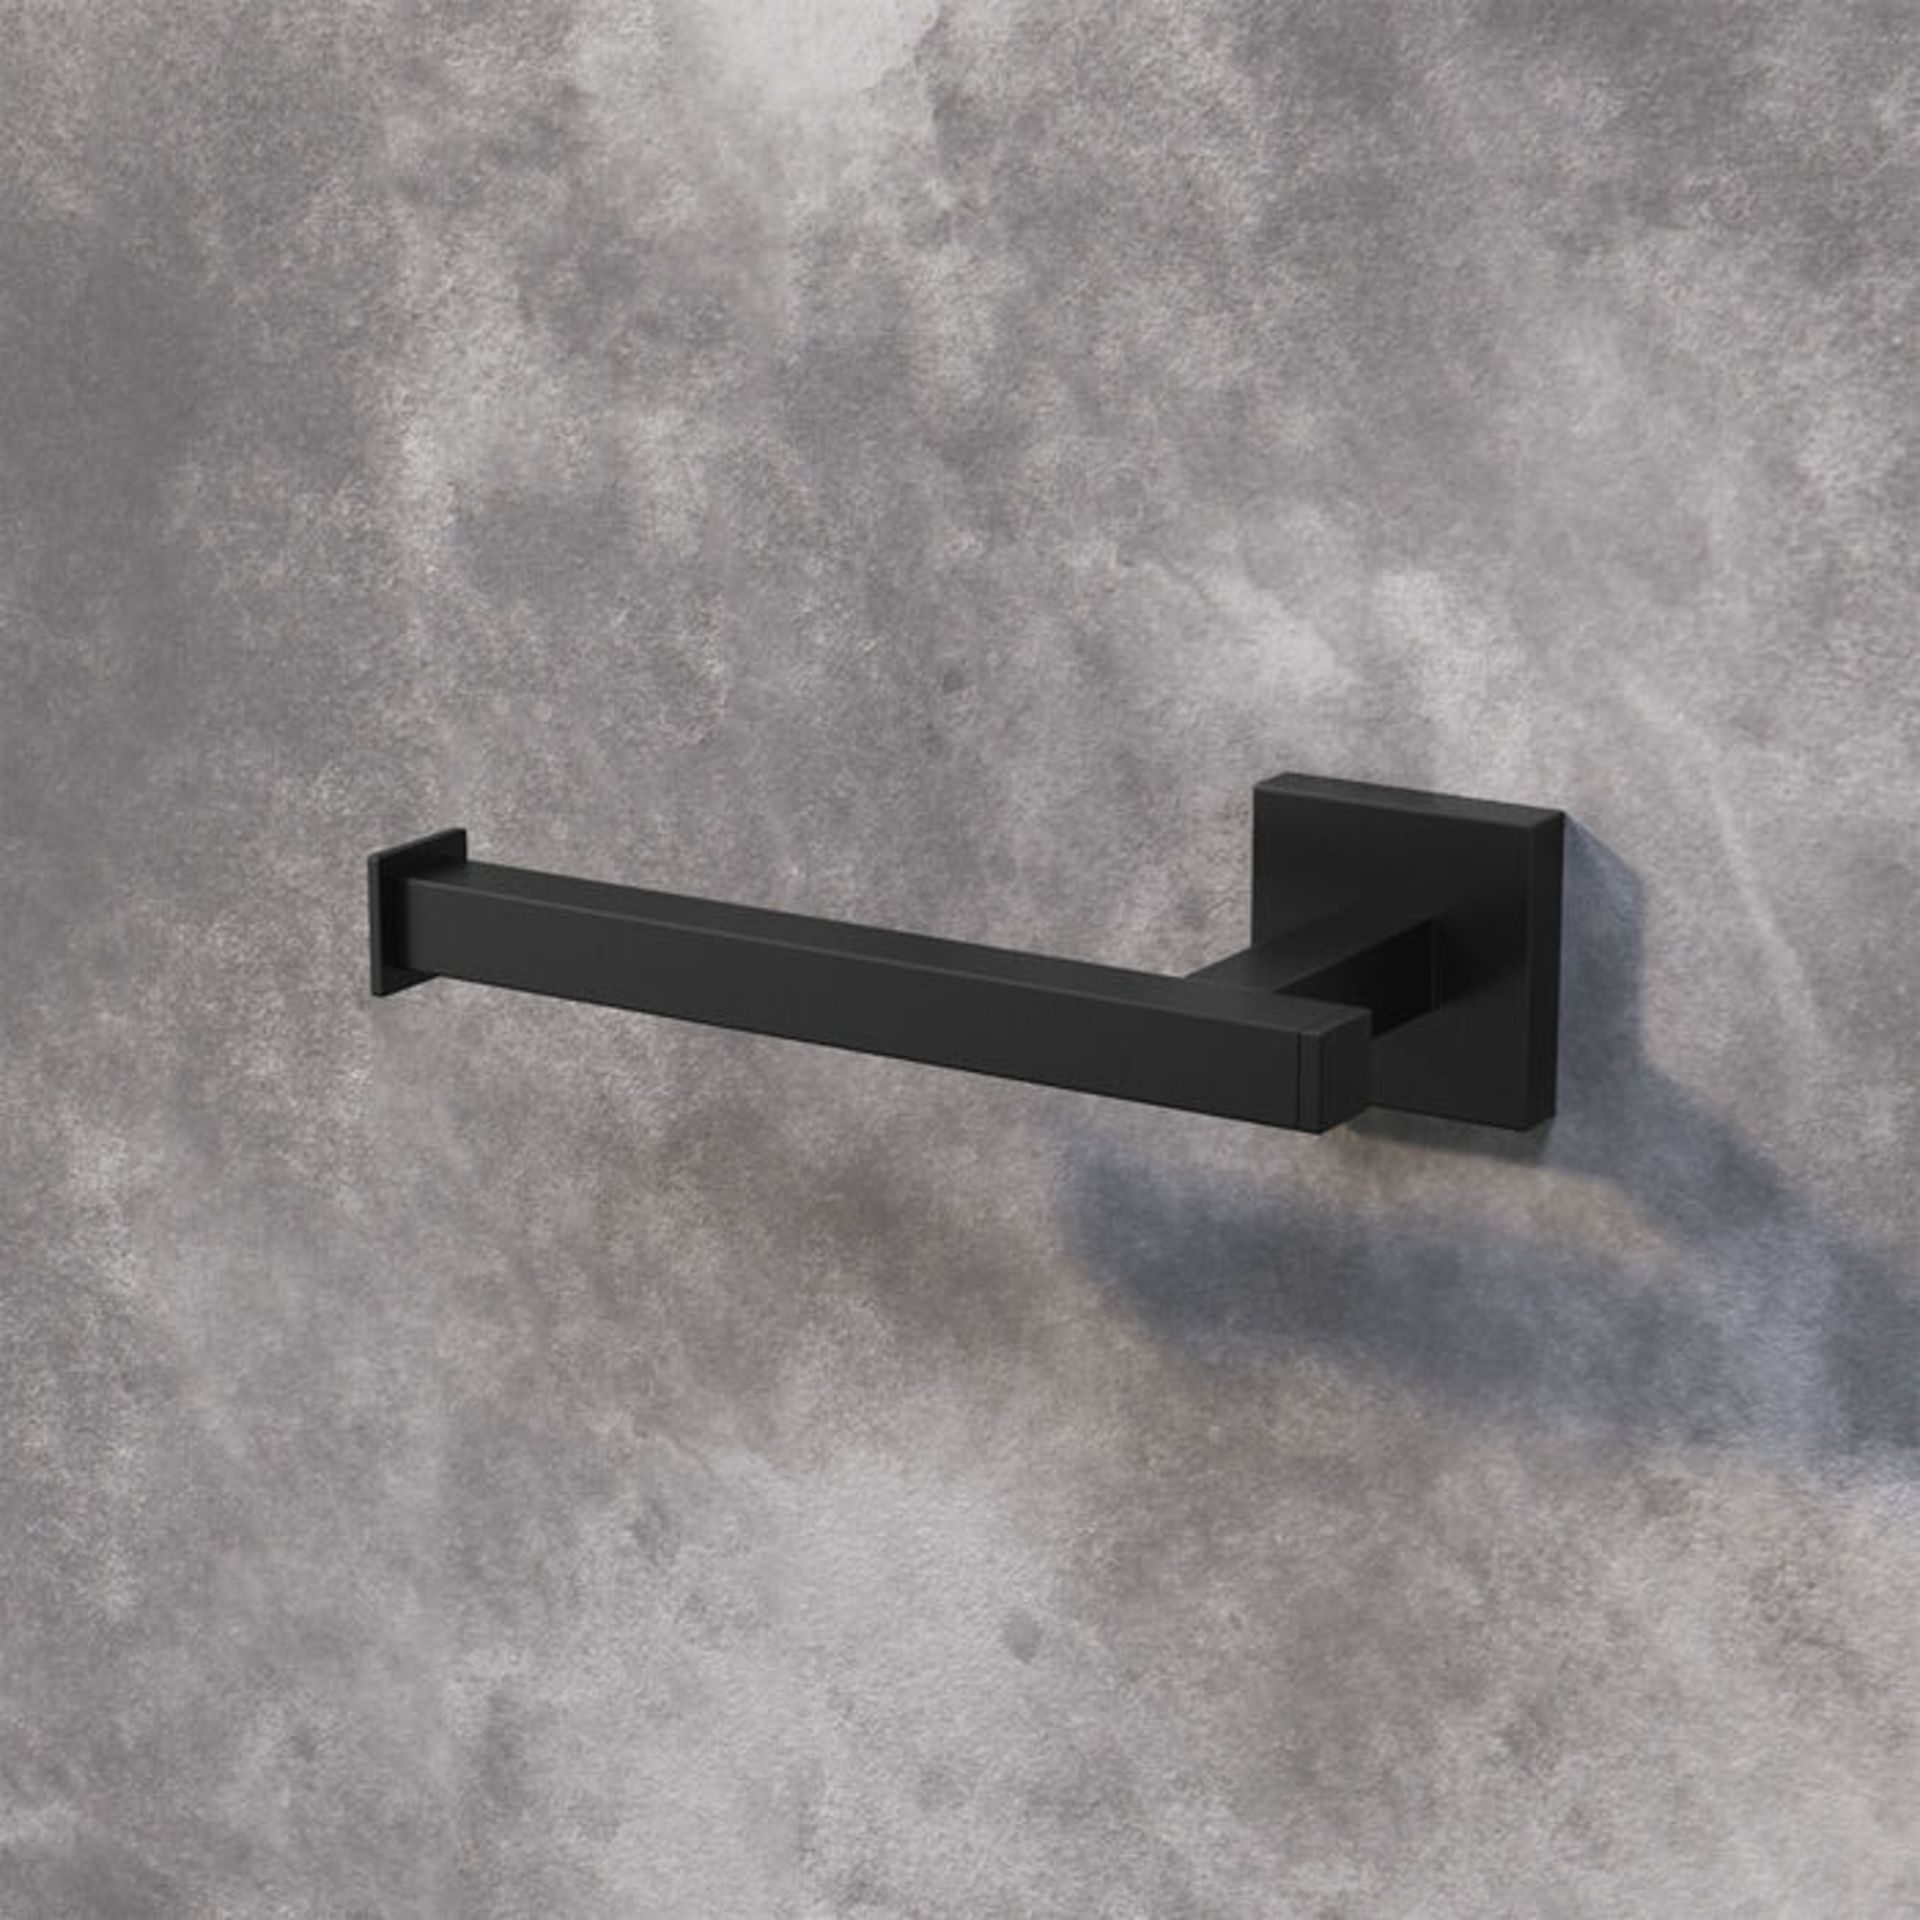 (YU1018) Iker Black Toilet Roll Holder Statement aesthetic for minimalist appeal Luxurious, c...